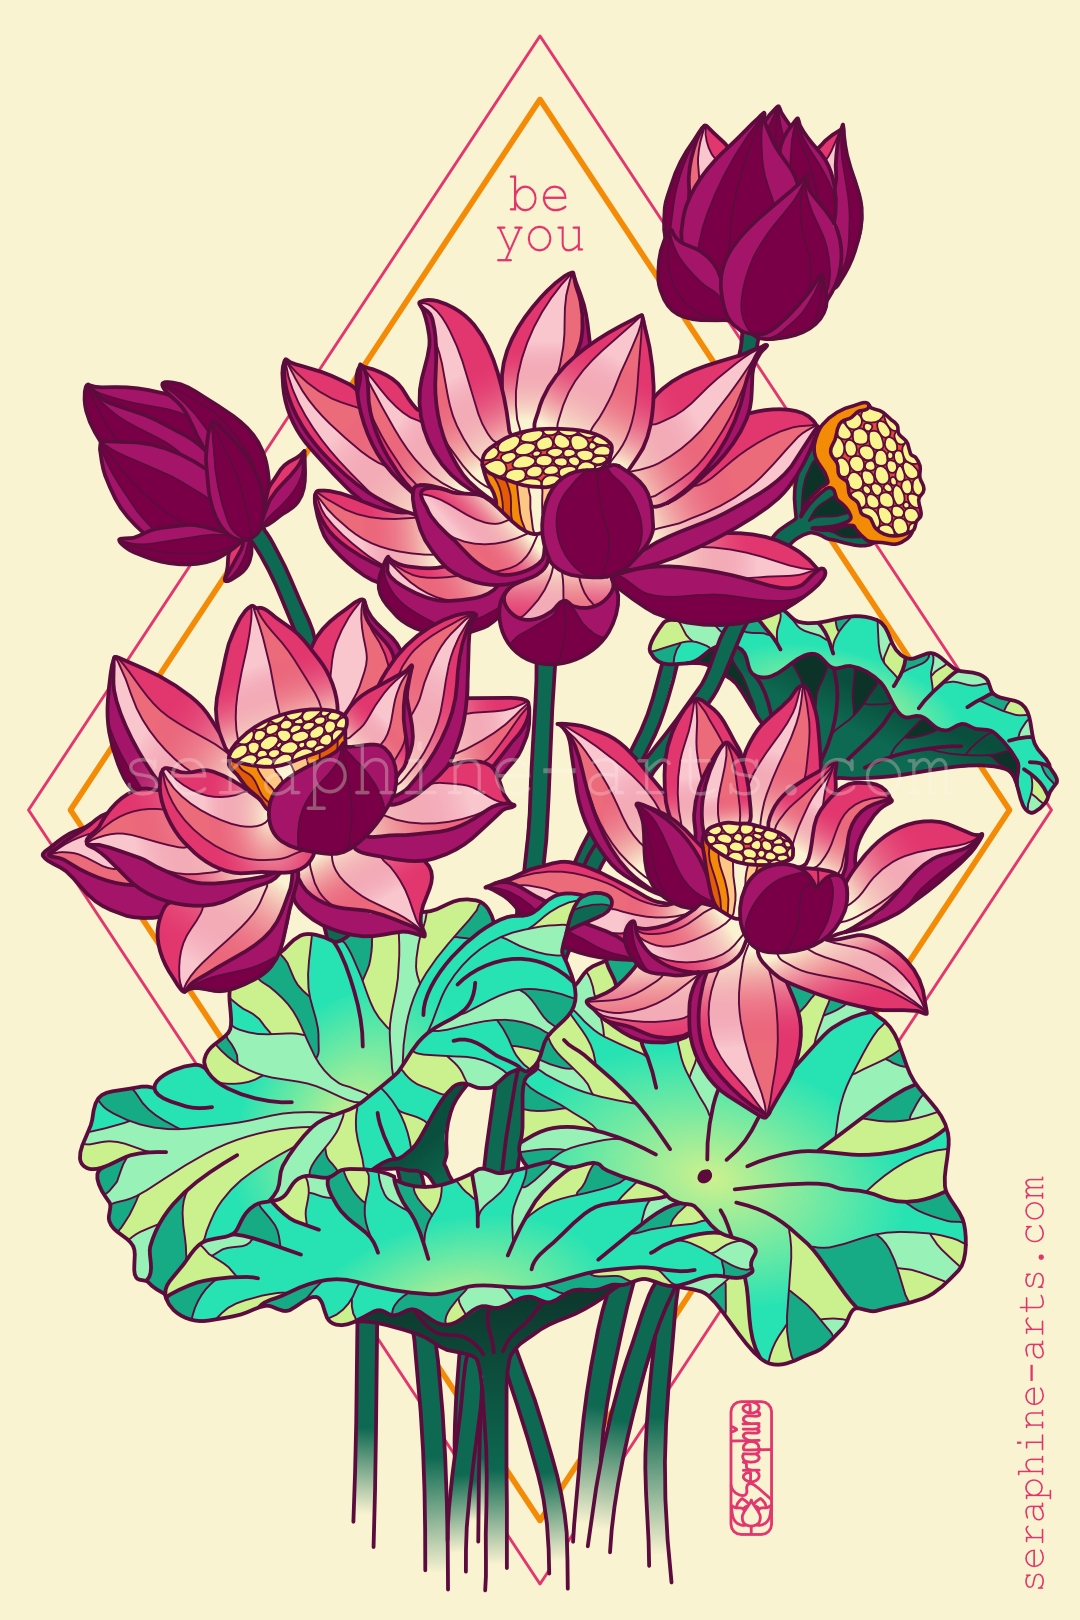 images/lotus-flower-quote.jpg